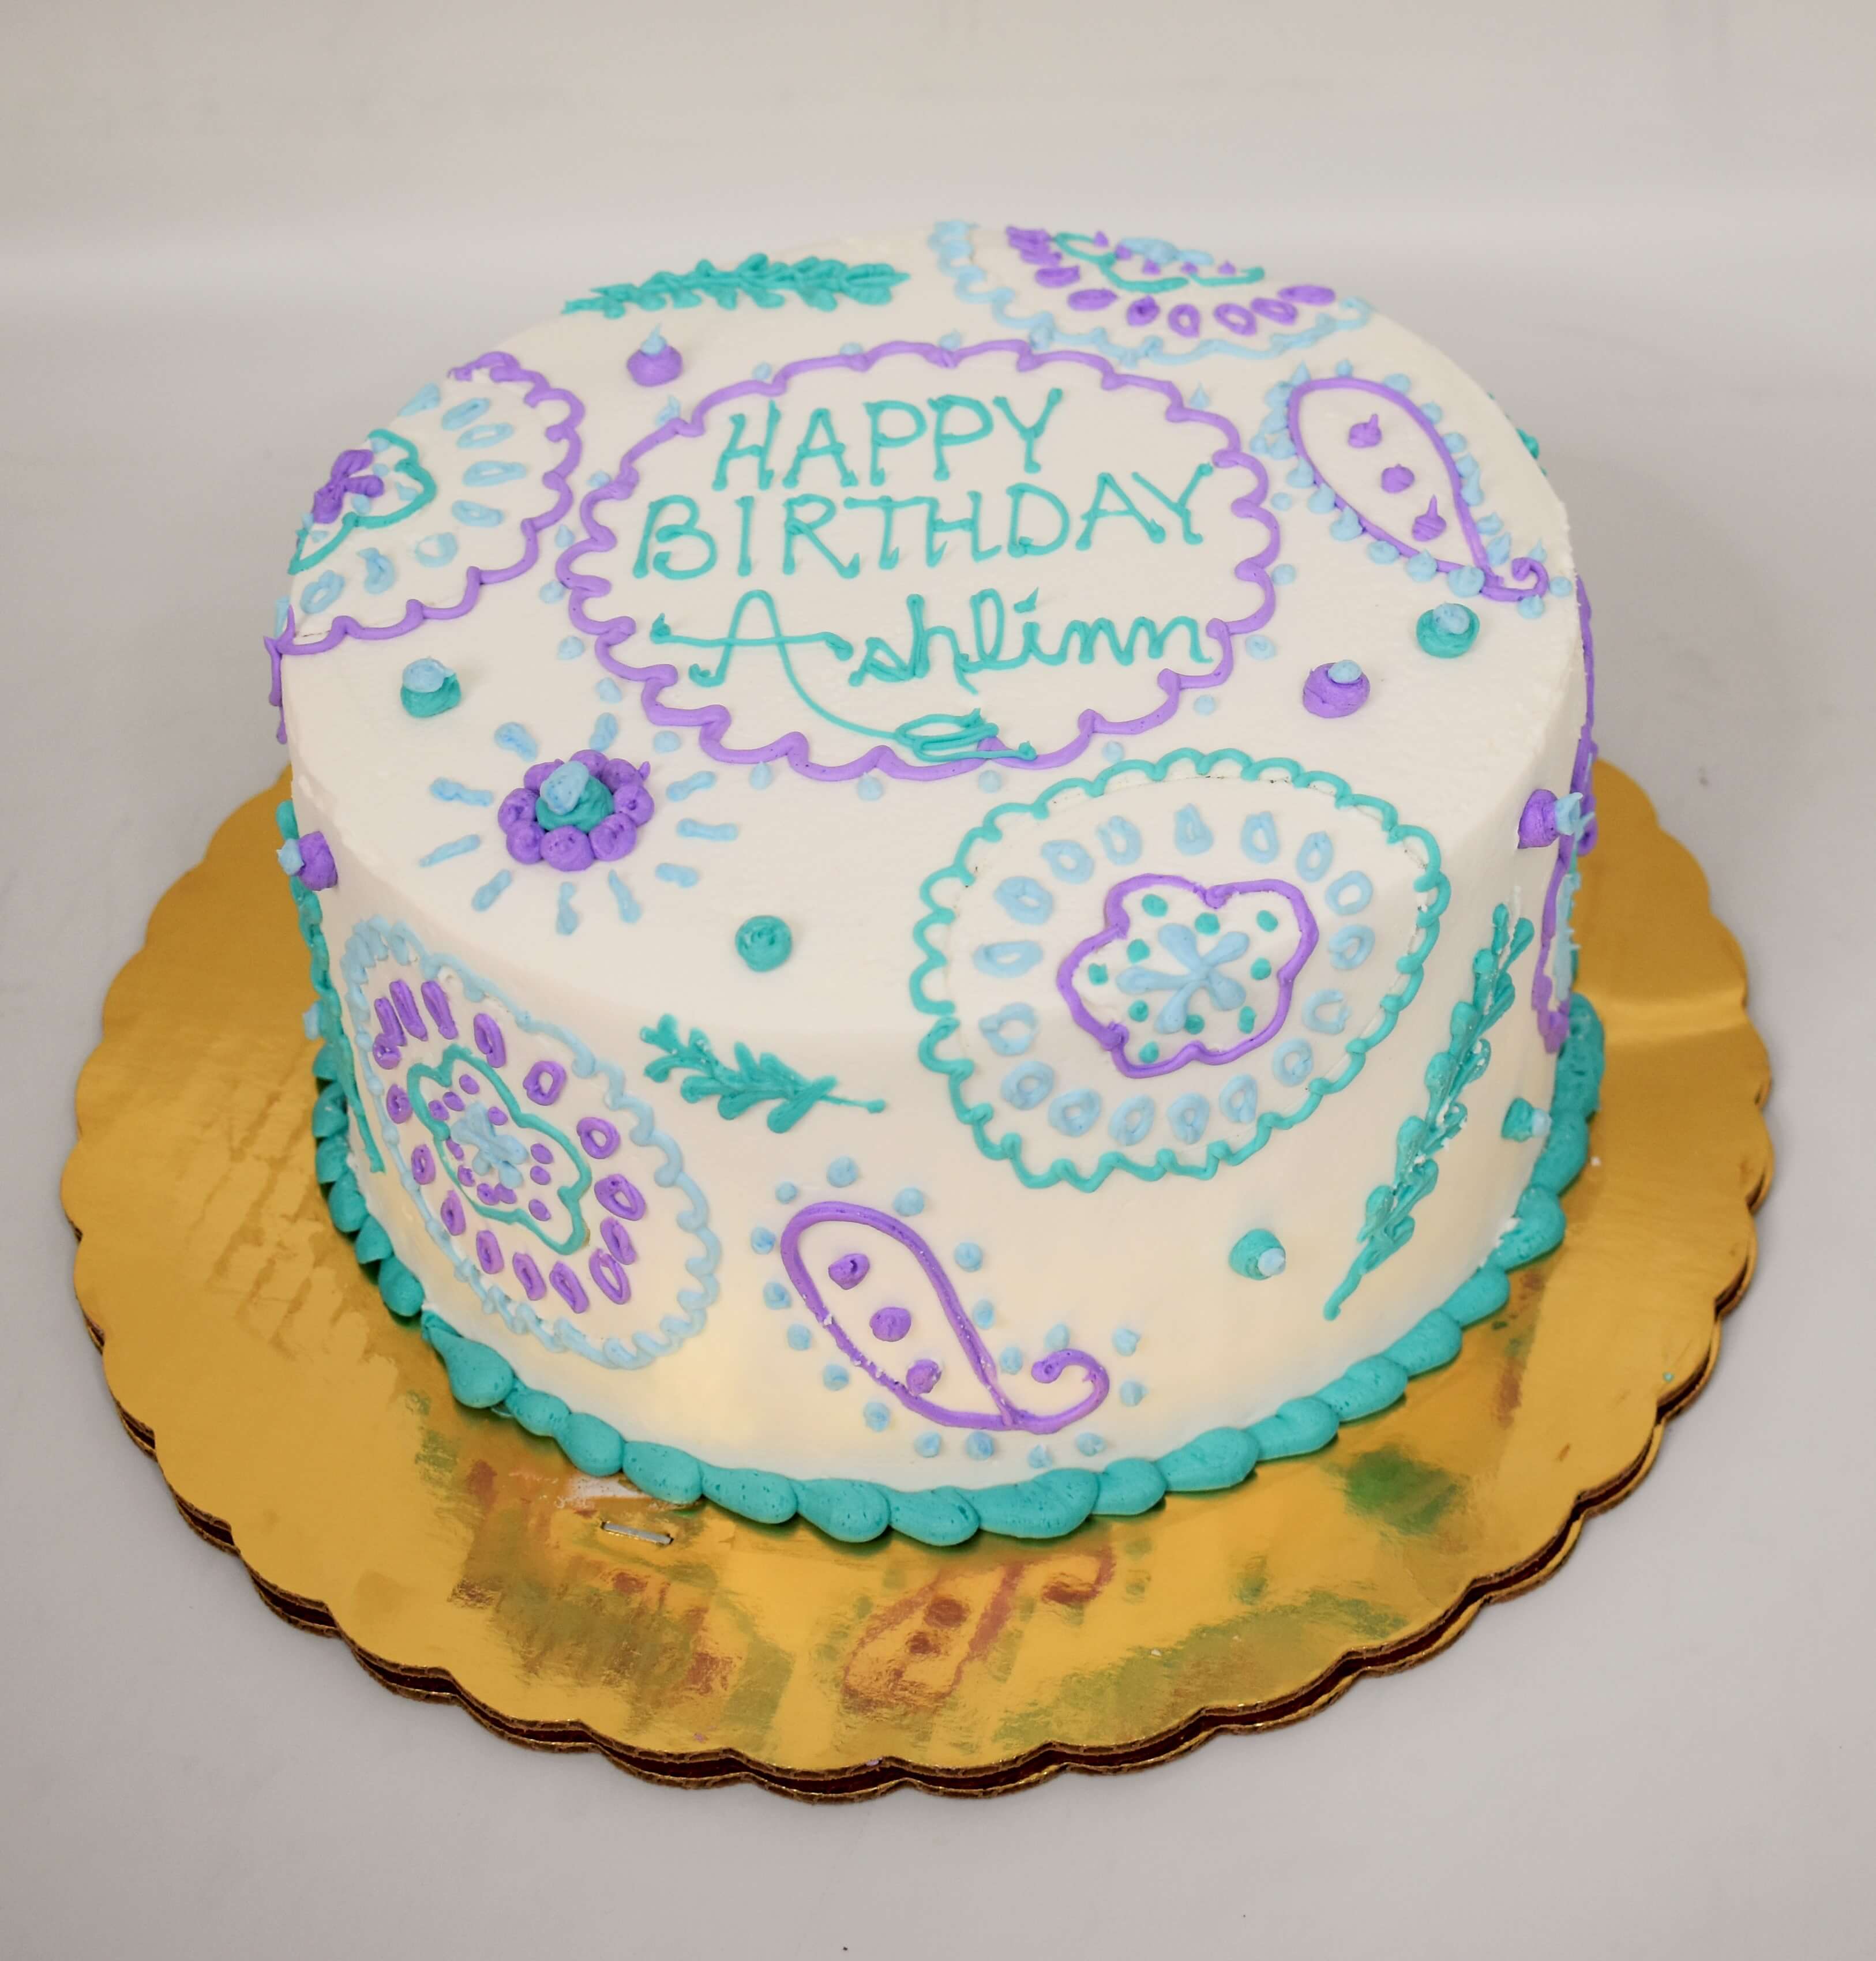 McArthur's Bakery Custom Cake with Purple Paisley, Teal Paisley